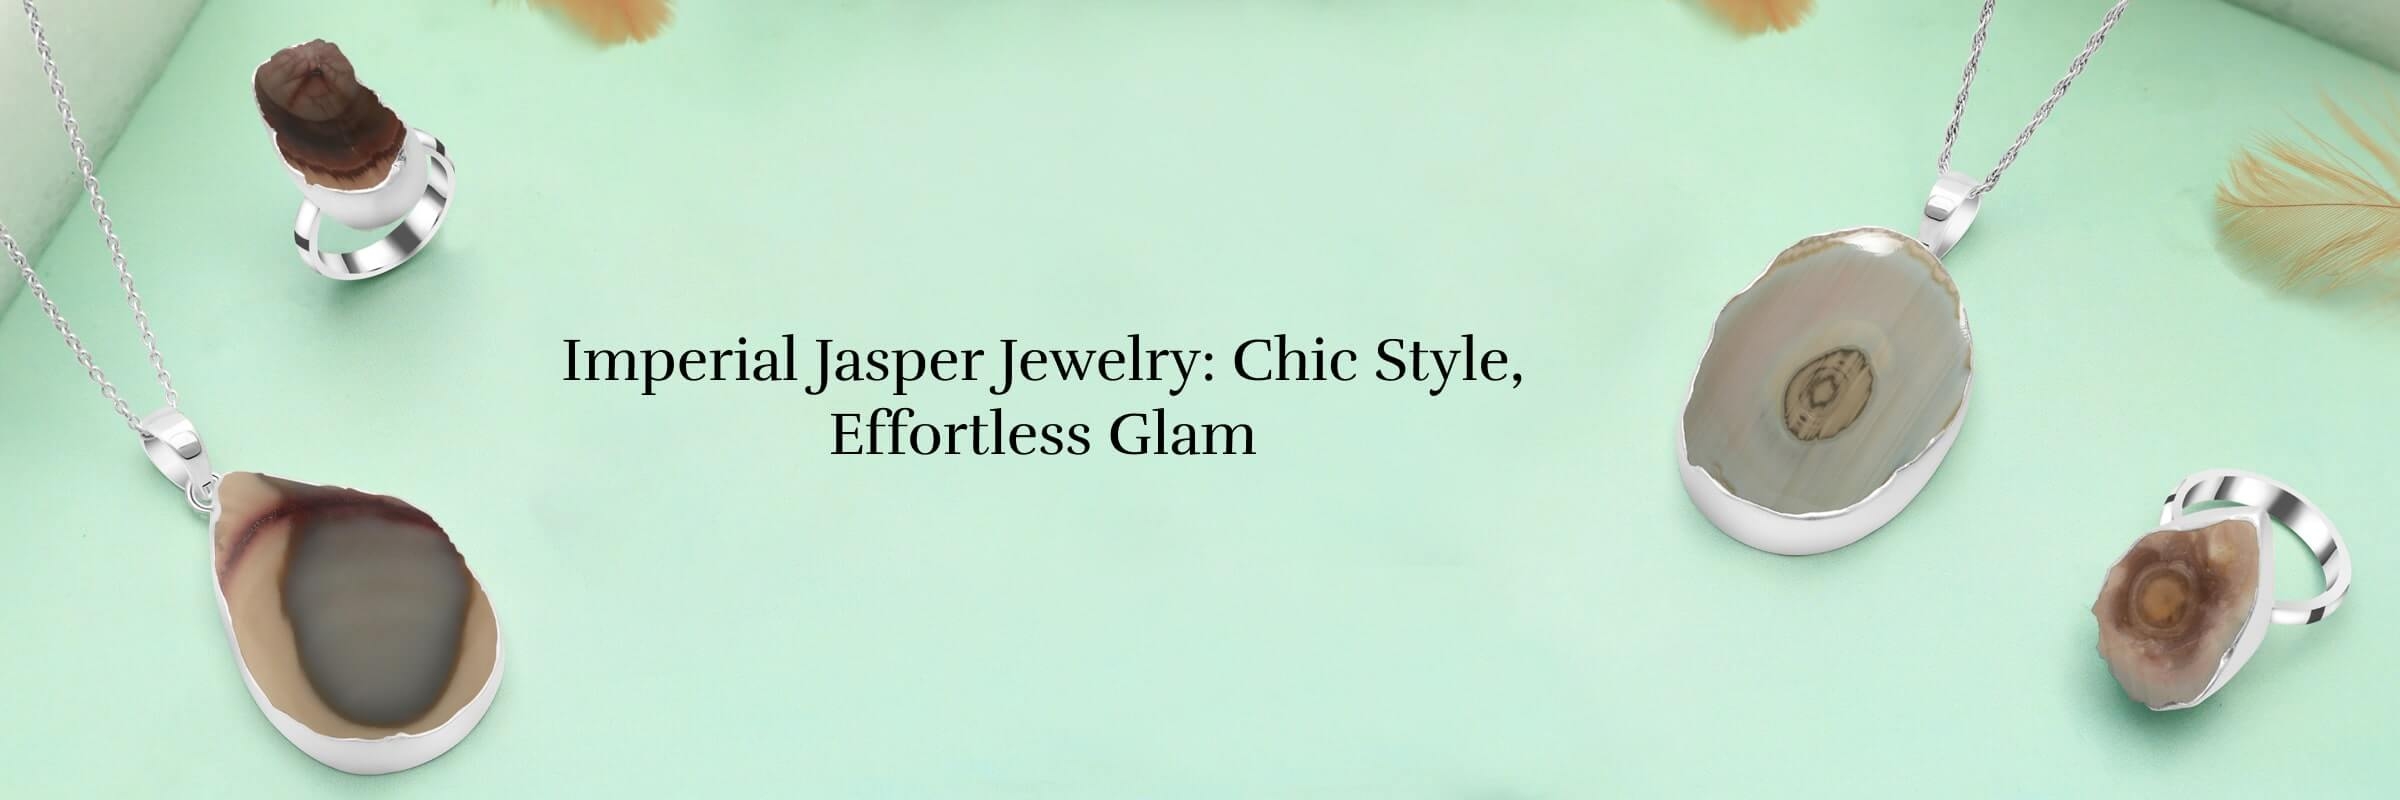 Imperial Jasper Jewelry